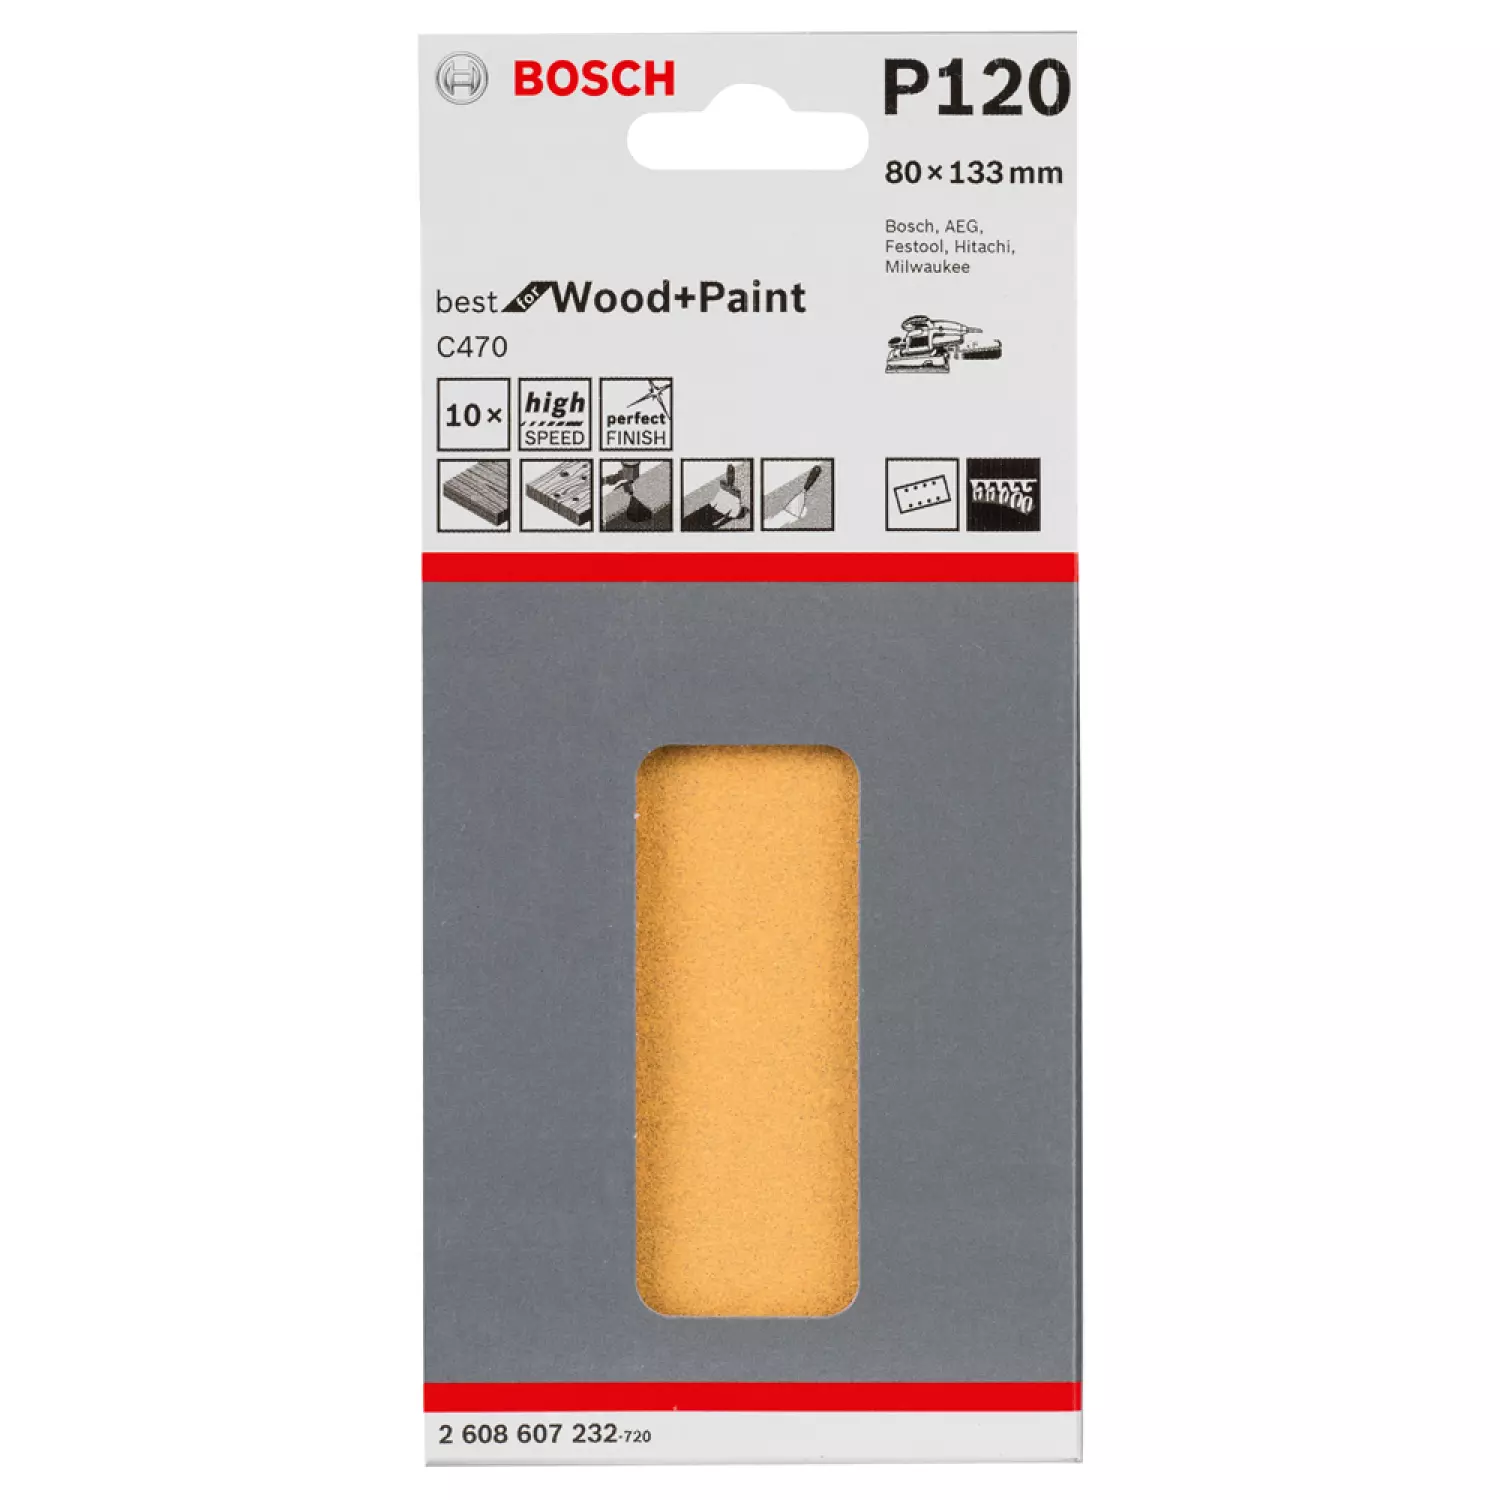 Bosch 06012A2300 - Ponceuse vibrante compacte GSS 160 Multi-usage-image